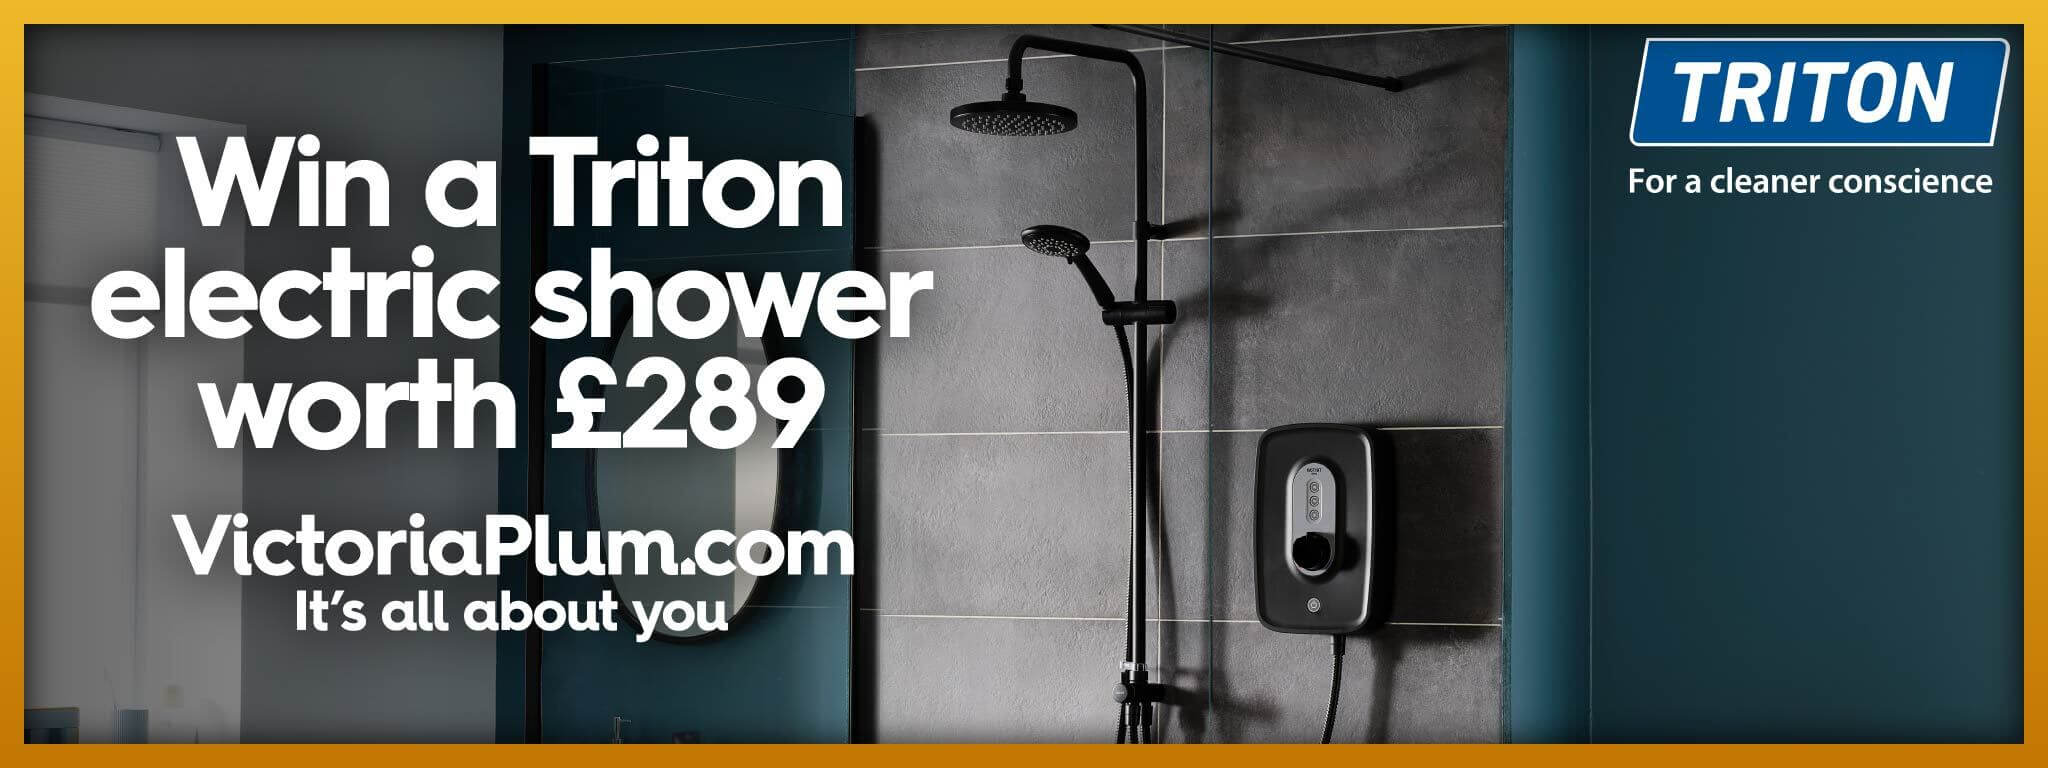 Win a Triton electric shower with Victoria Plum